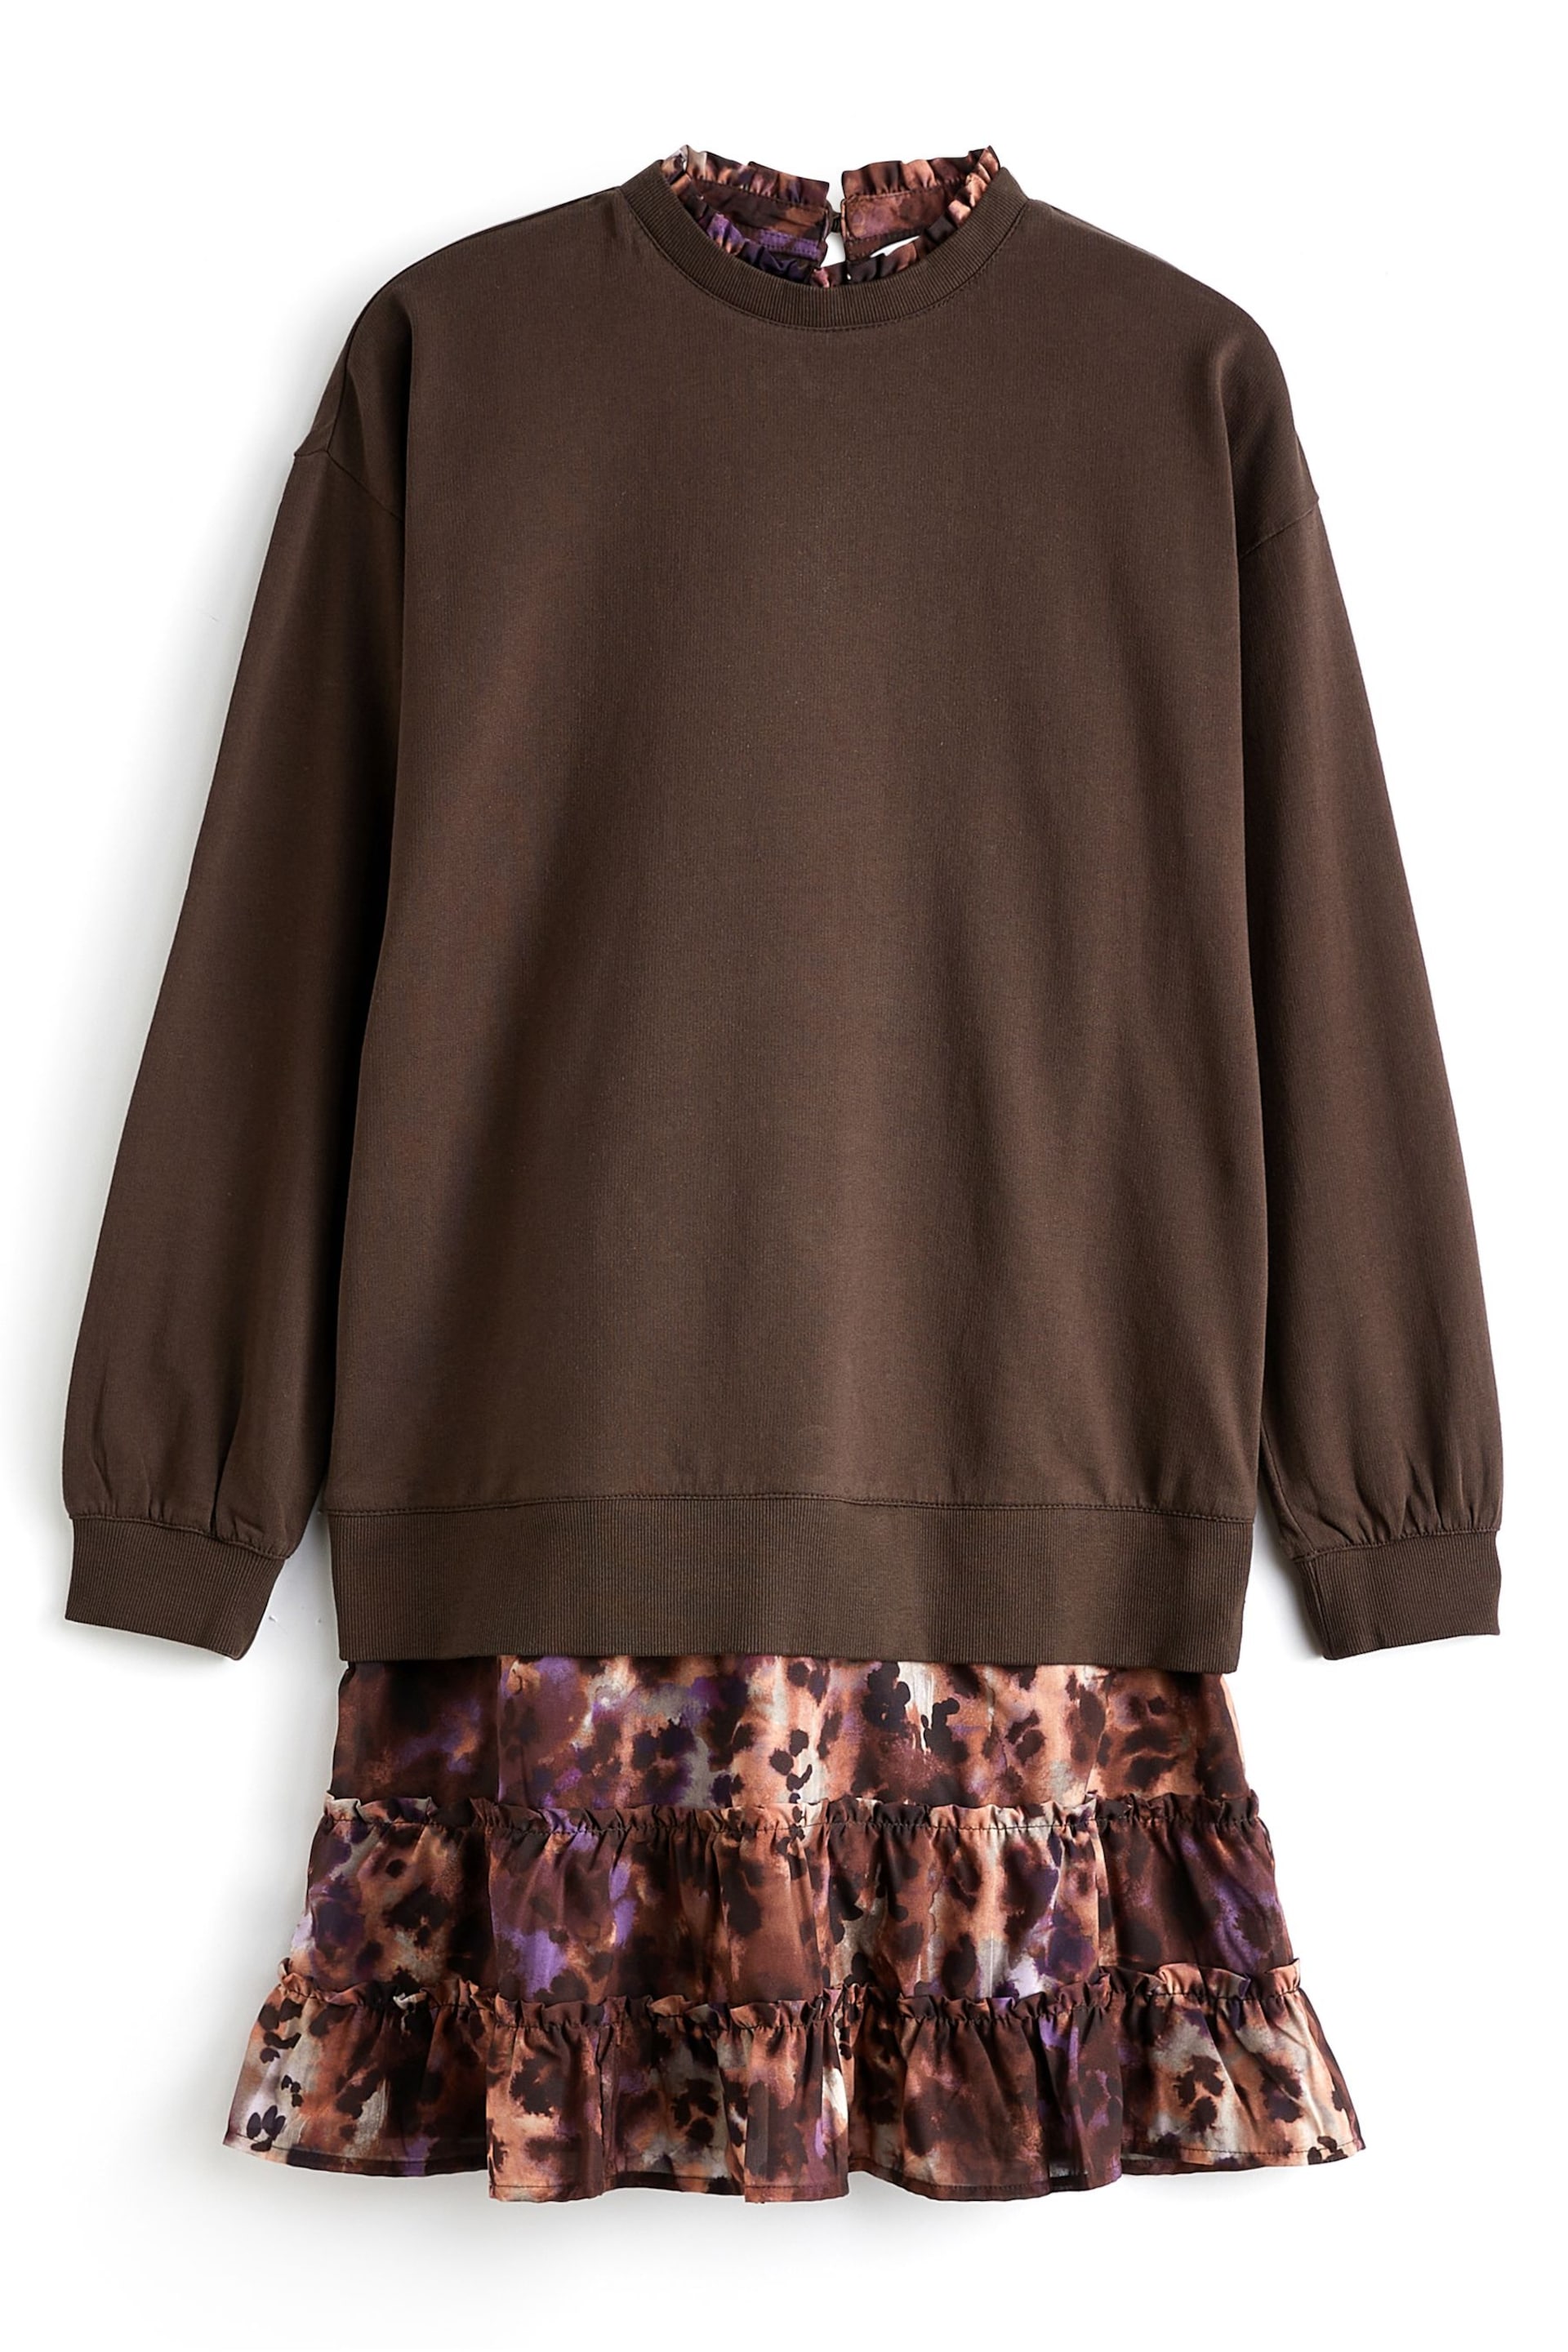 Chocolate Brown Animal Layered Sweatshirt Long Sleeve Animal Print Dress - Image 5 of 6